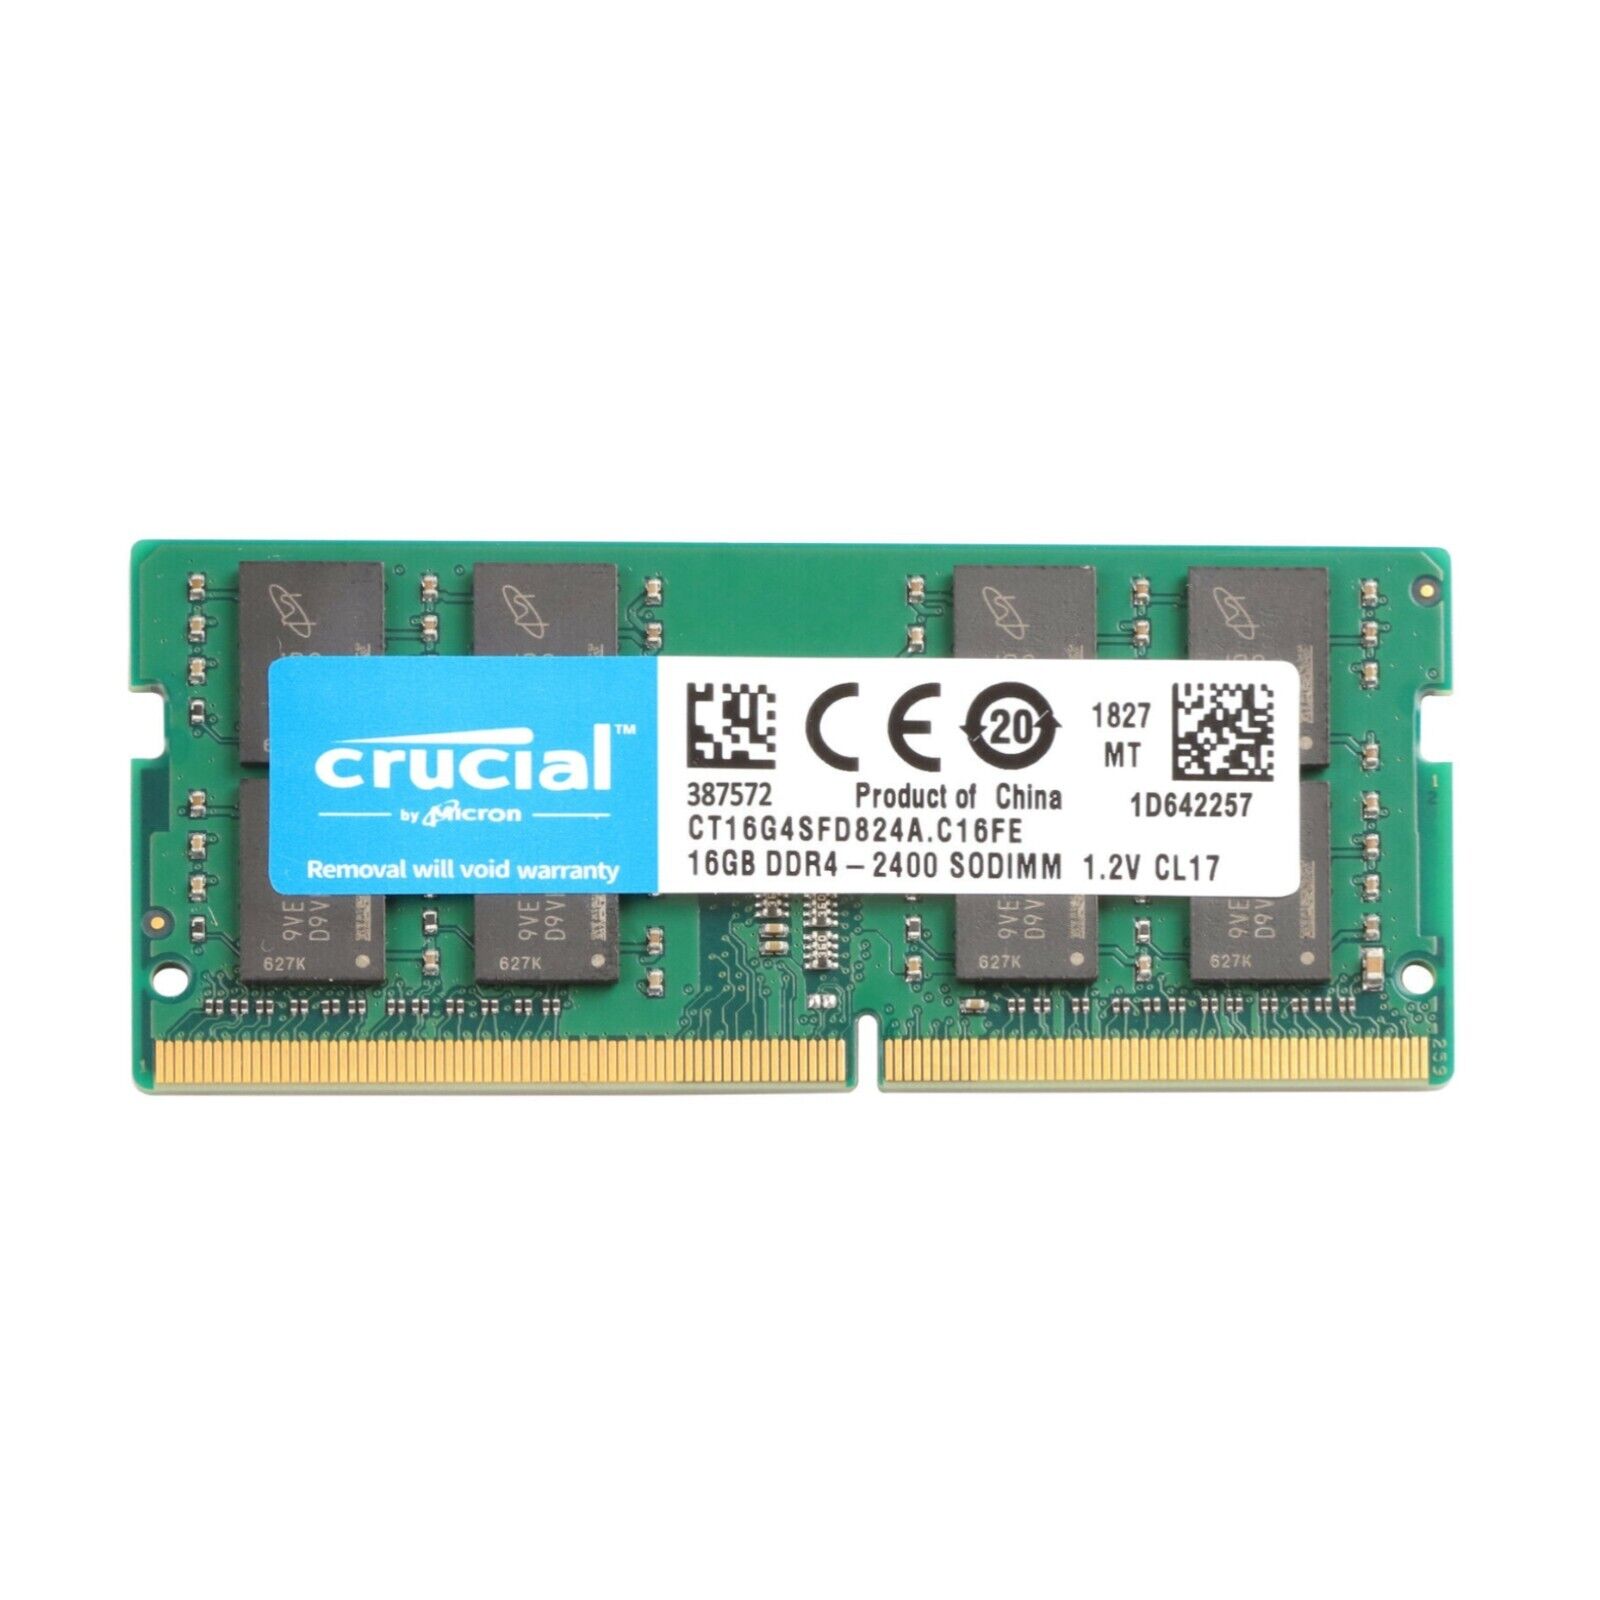 New Crucial 16GB DDR4 2400MHz PC4-19200 260Pins SODIMM Memory Ram CT16G4SFD824A